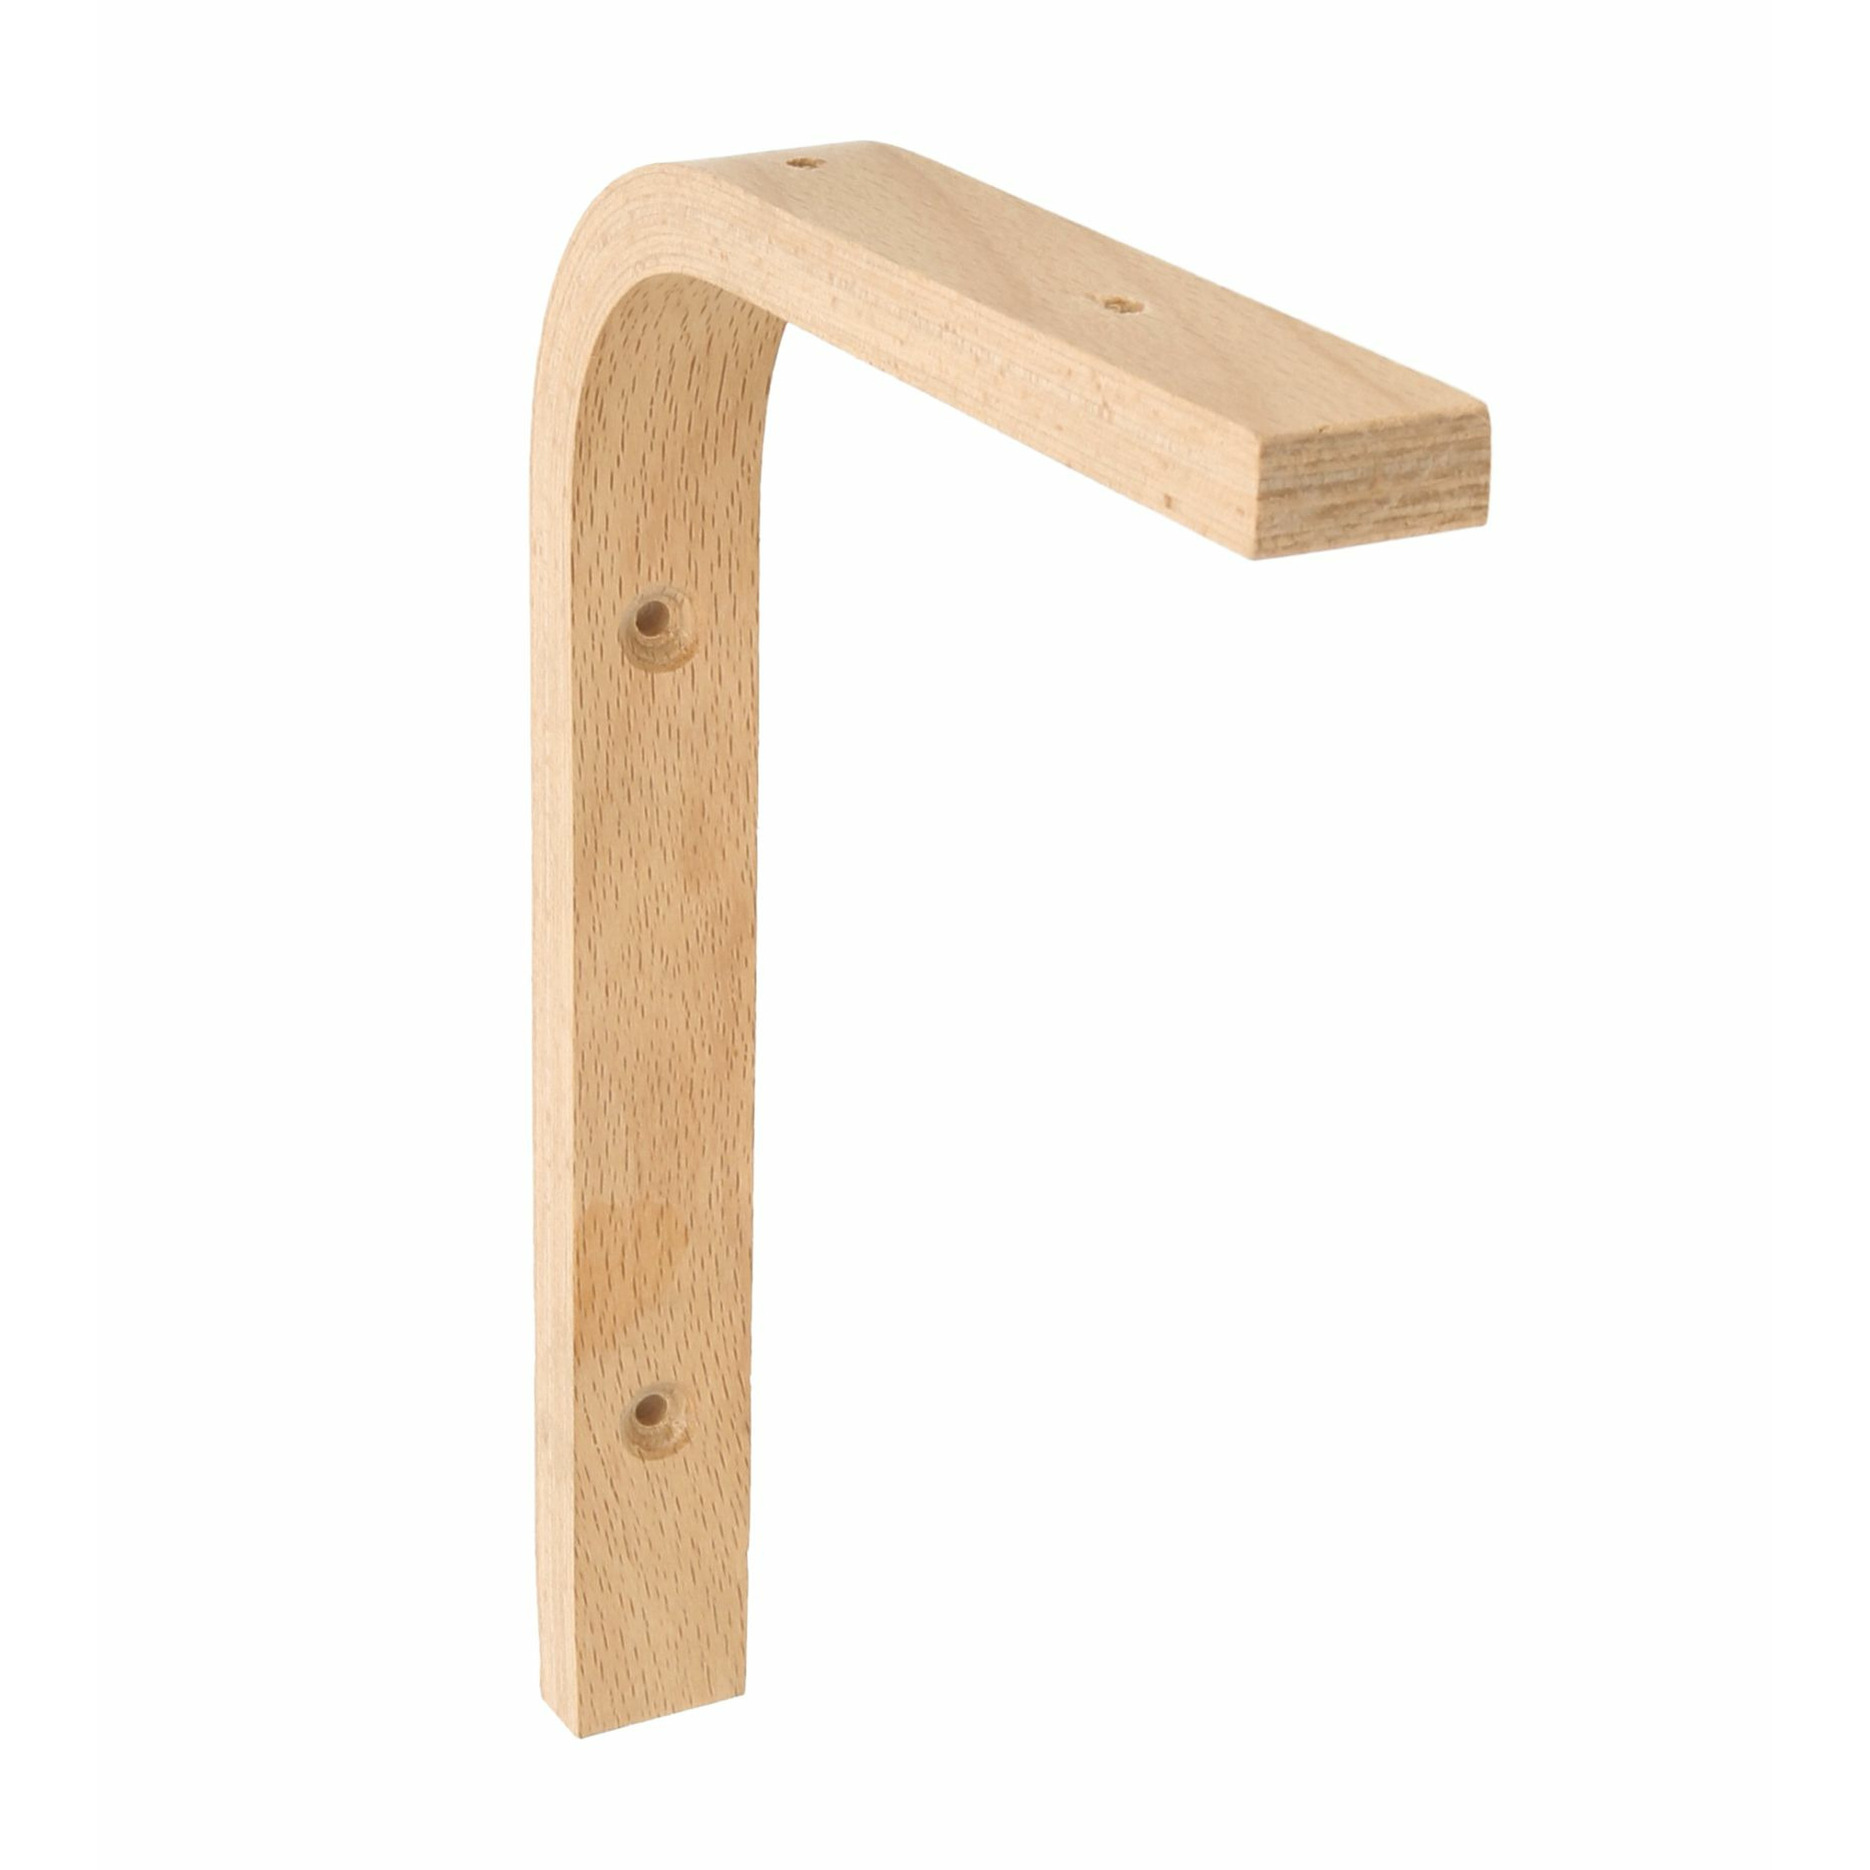 AMIG Plankdrager/planksteun van hout - lichtbruin - H250 x B200 mm -